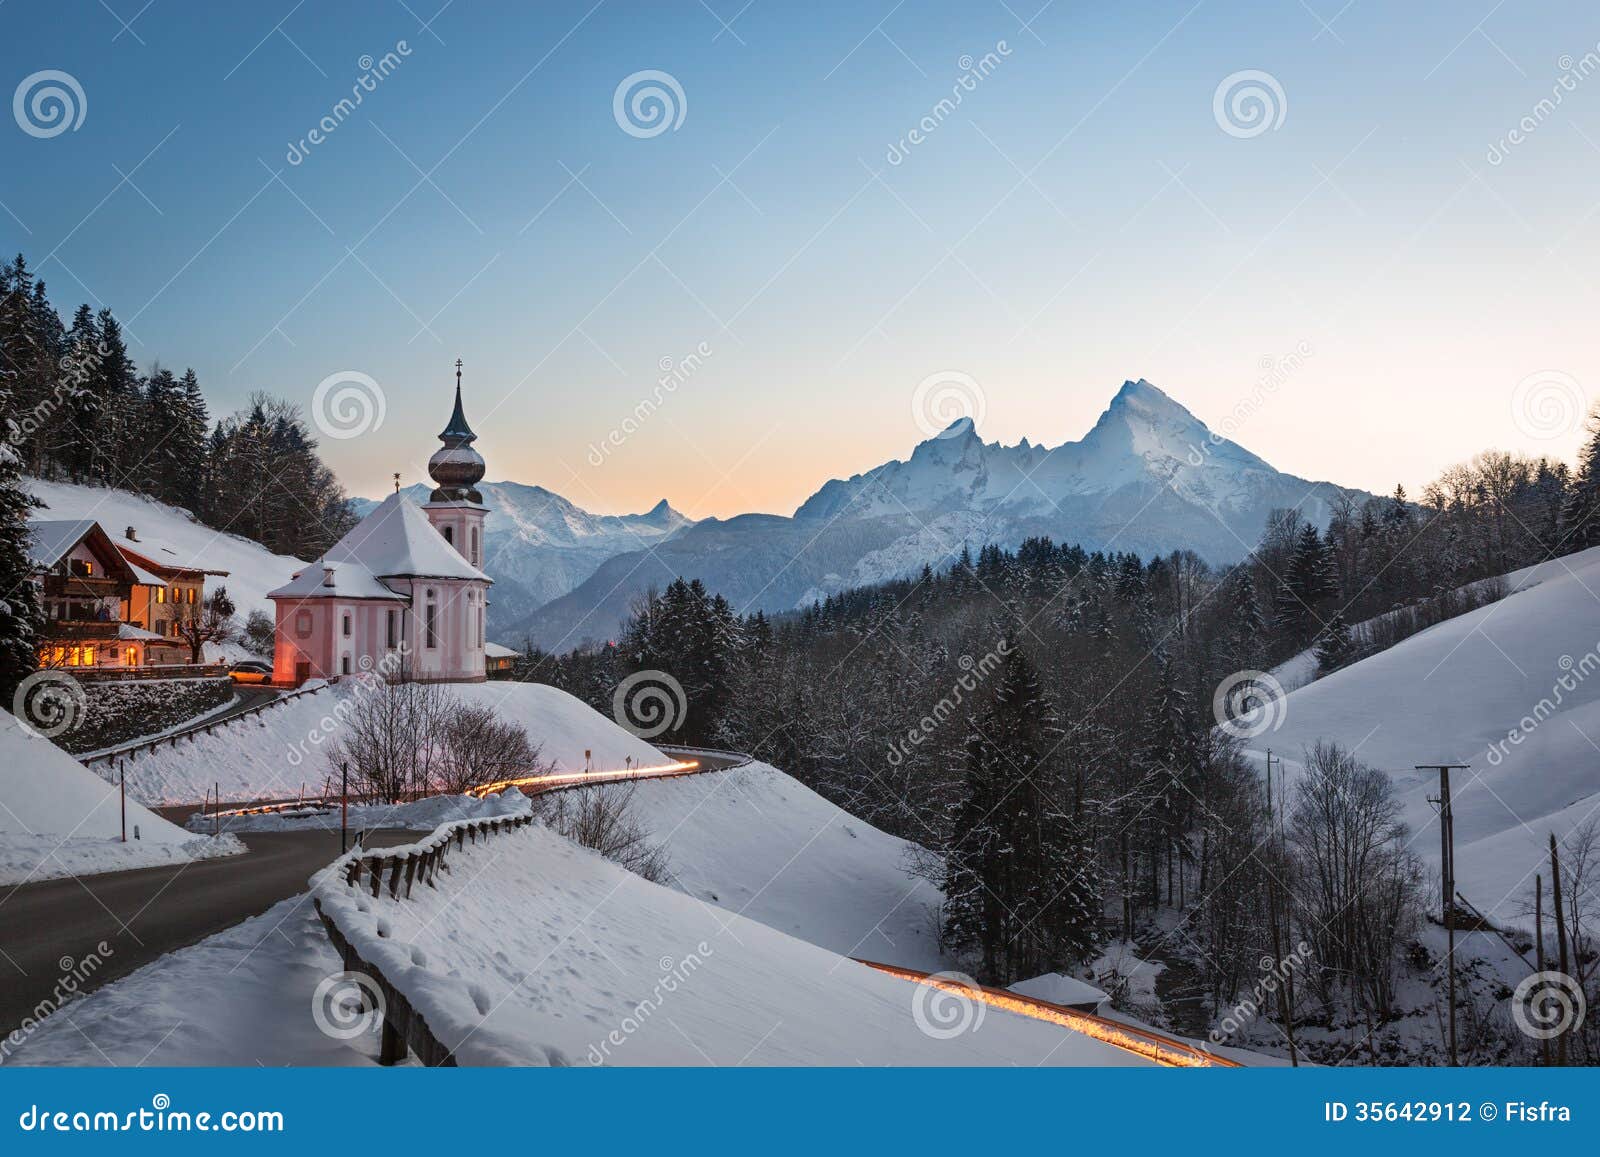 maria gern church in bavaria with watzmann, berchtesgaden, germany alps